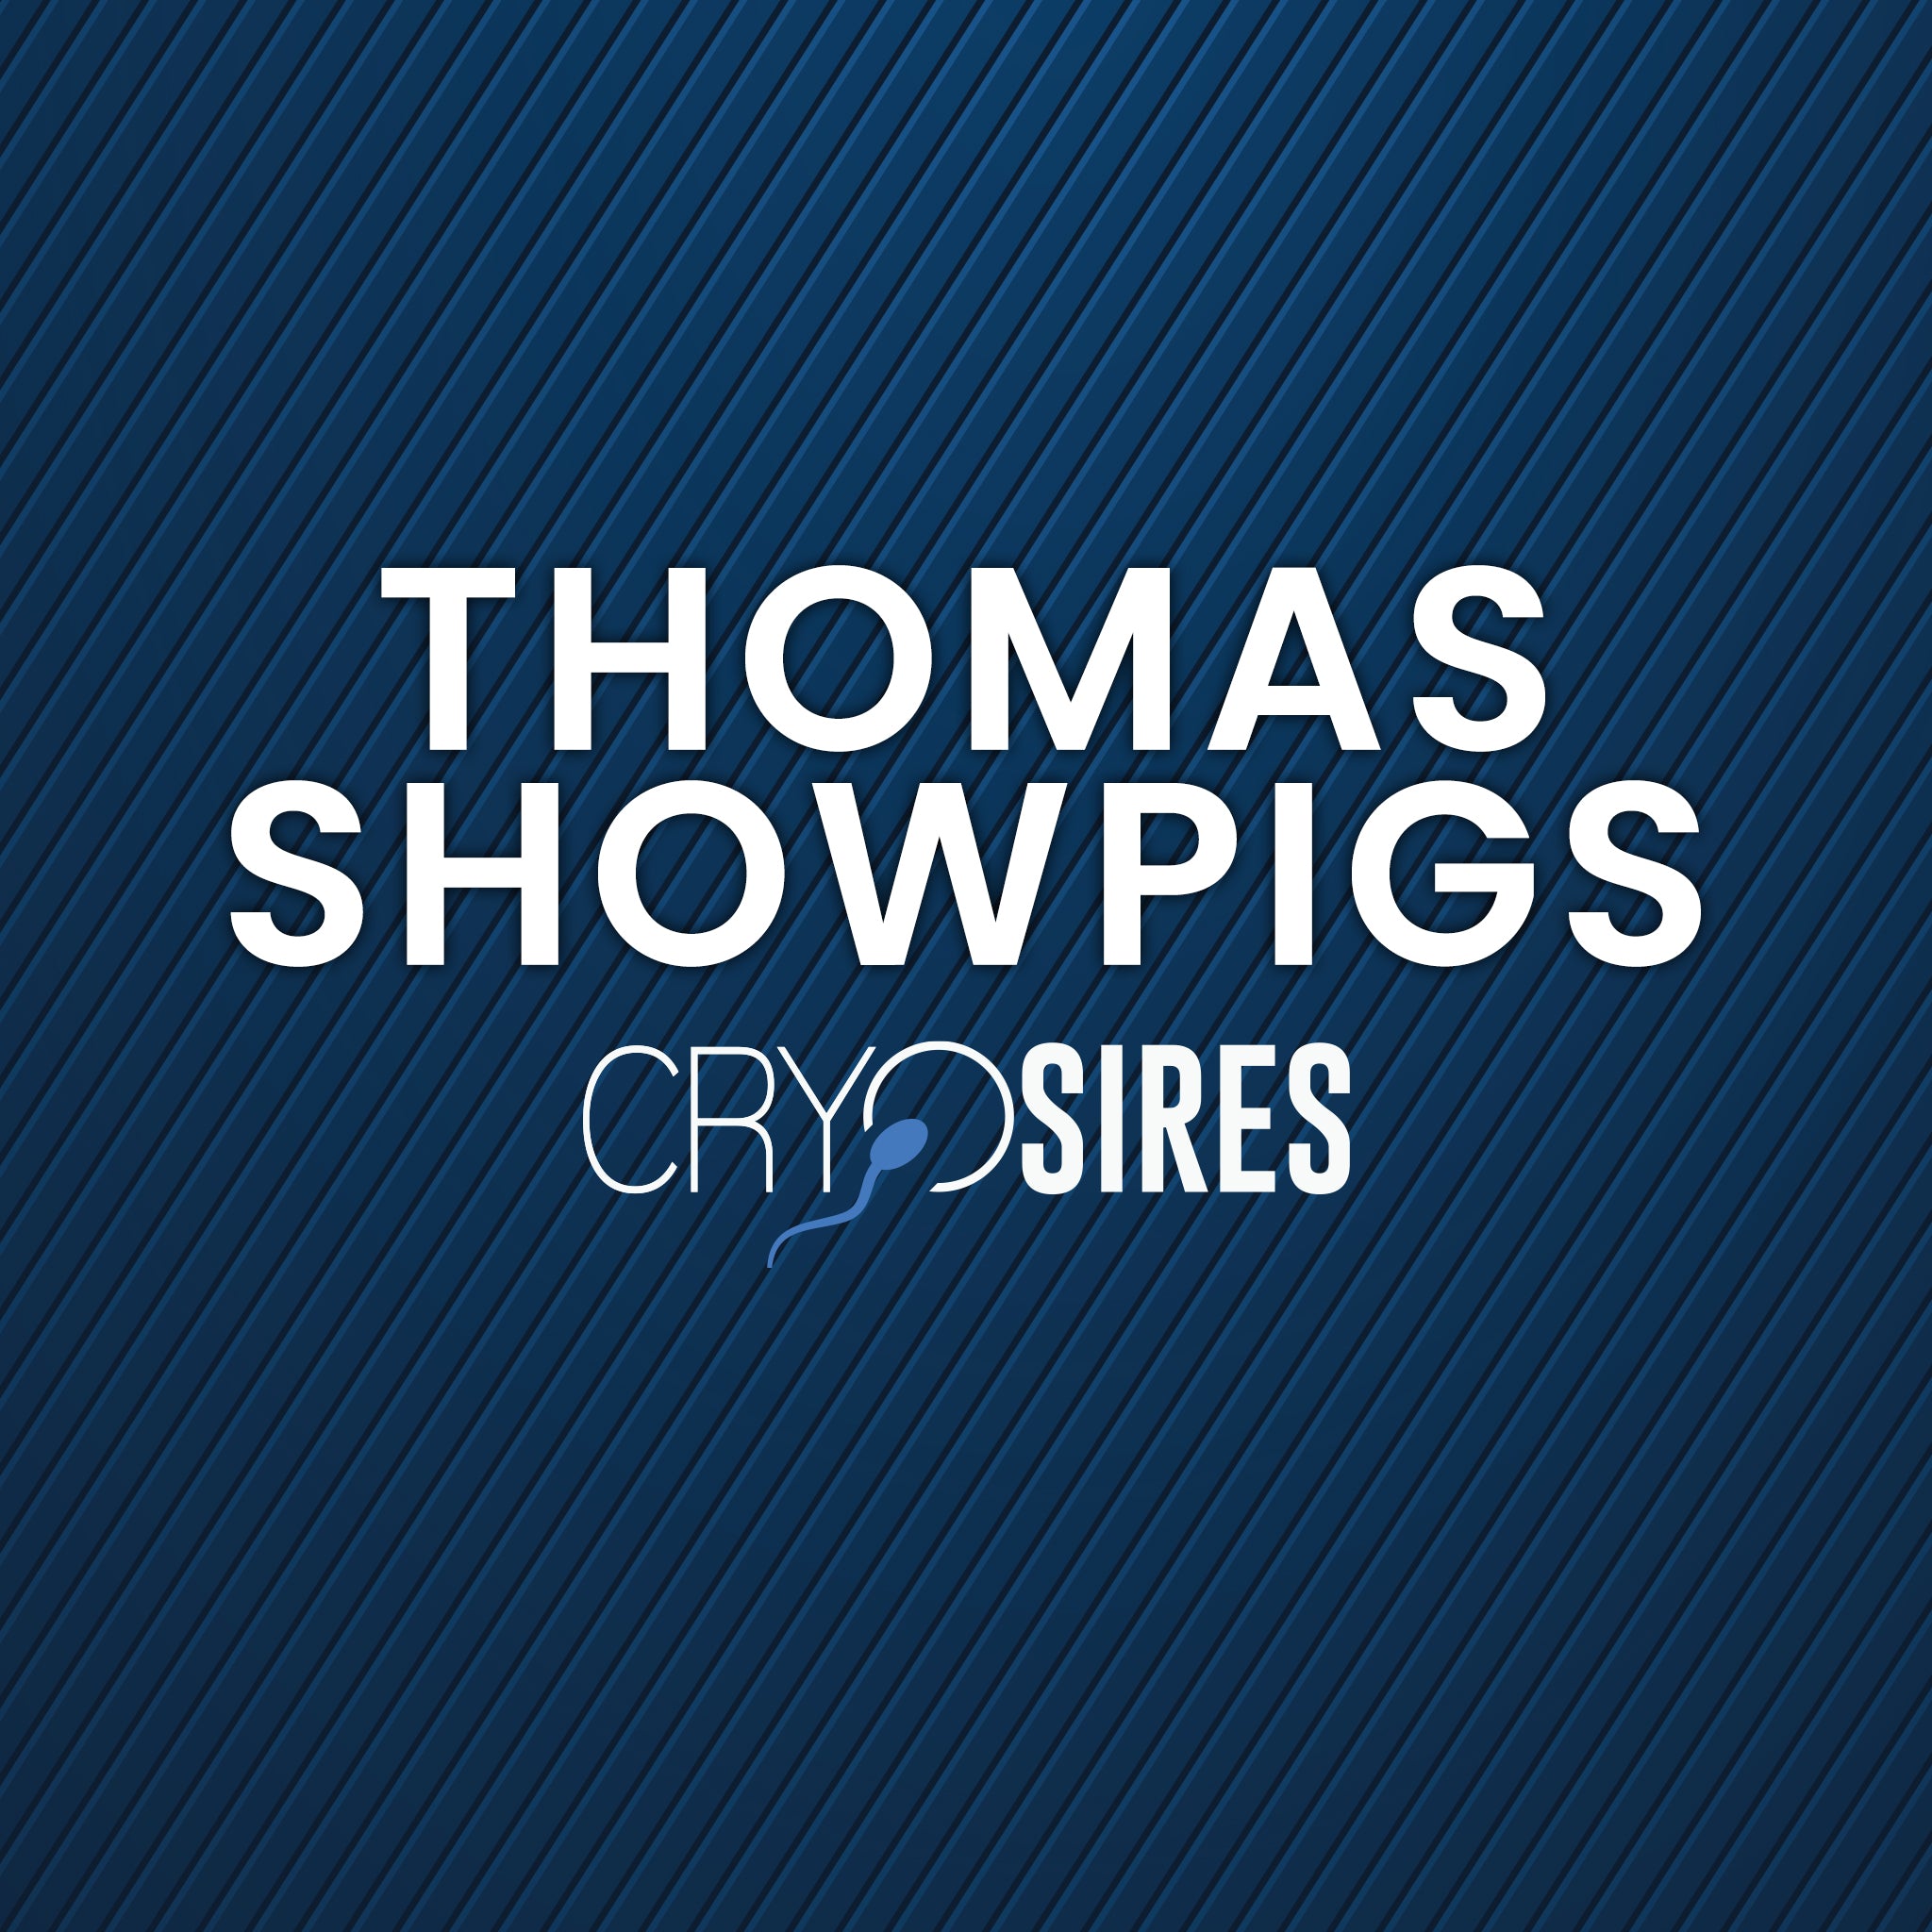 Thomas Showpigs